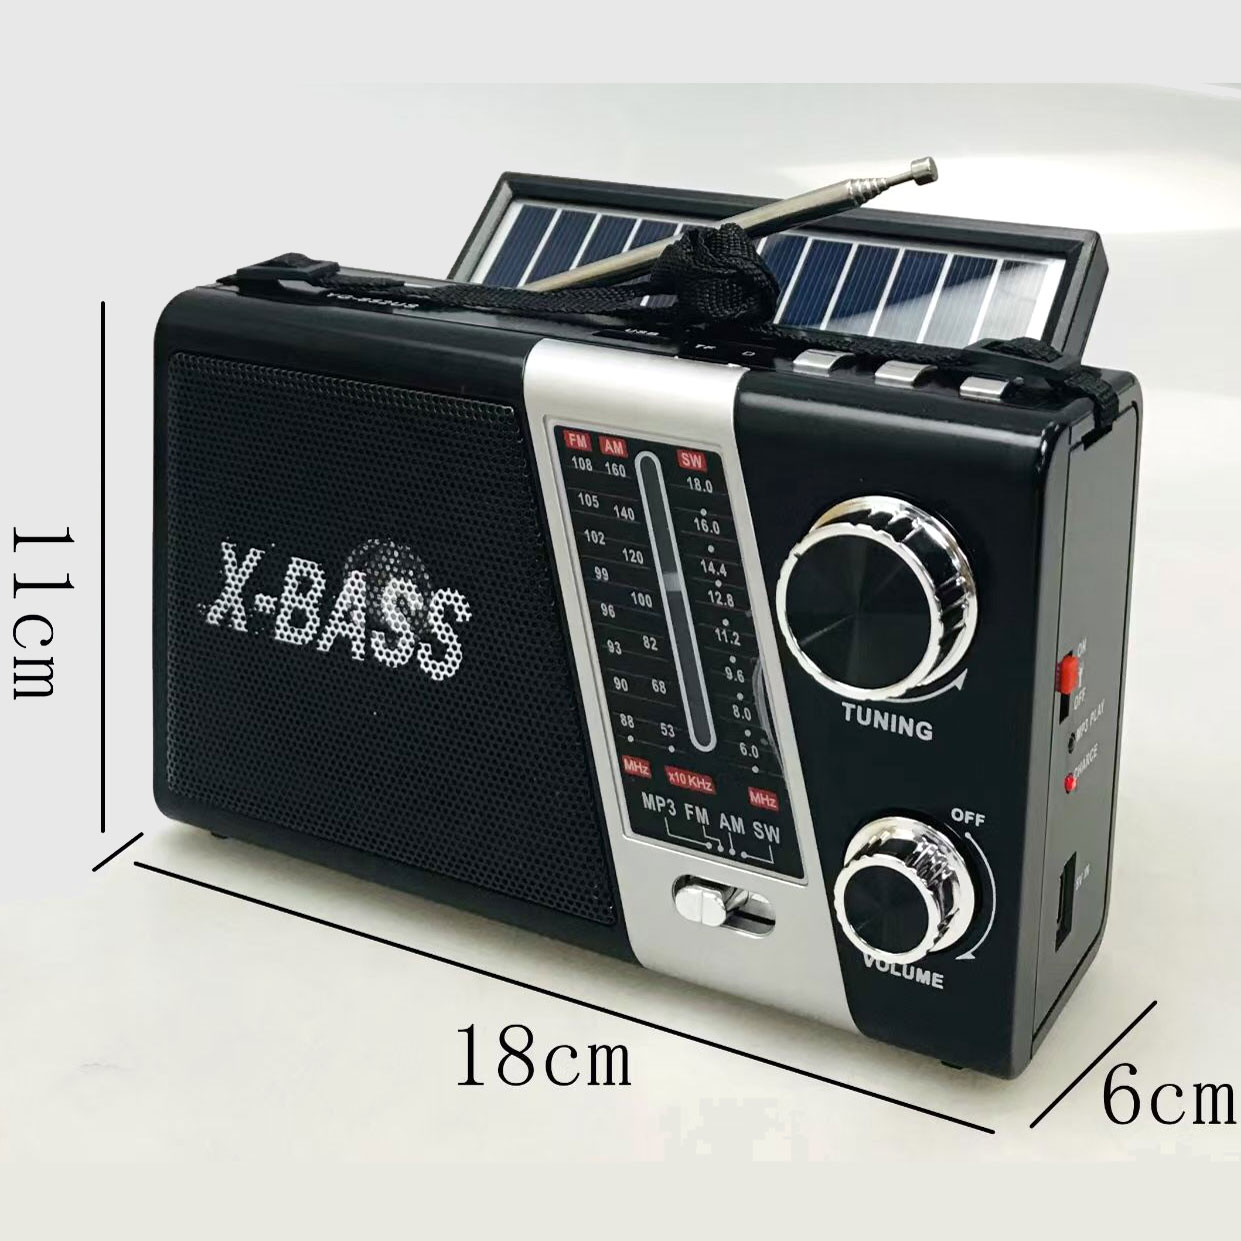 AM FM Radio USB MP3 Portable Speaker with LED Light and Solar Charge YG852US (Black)